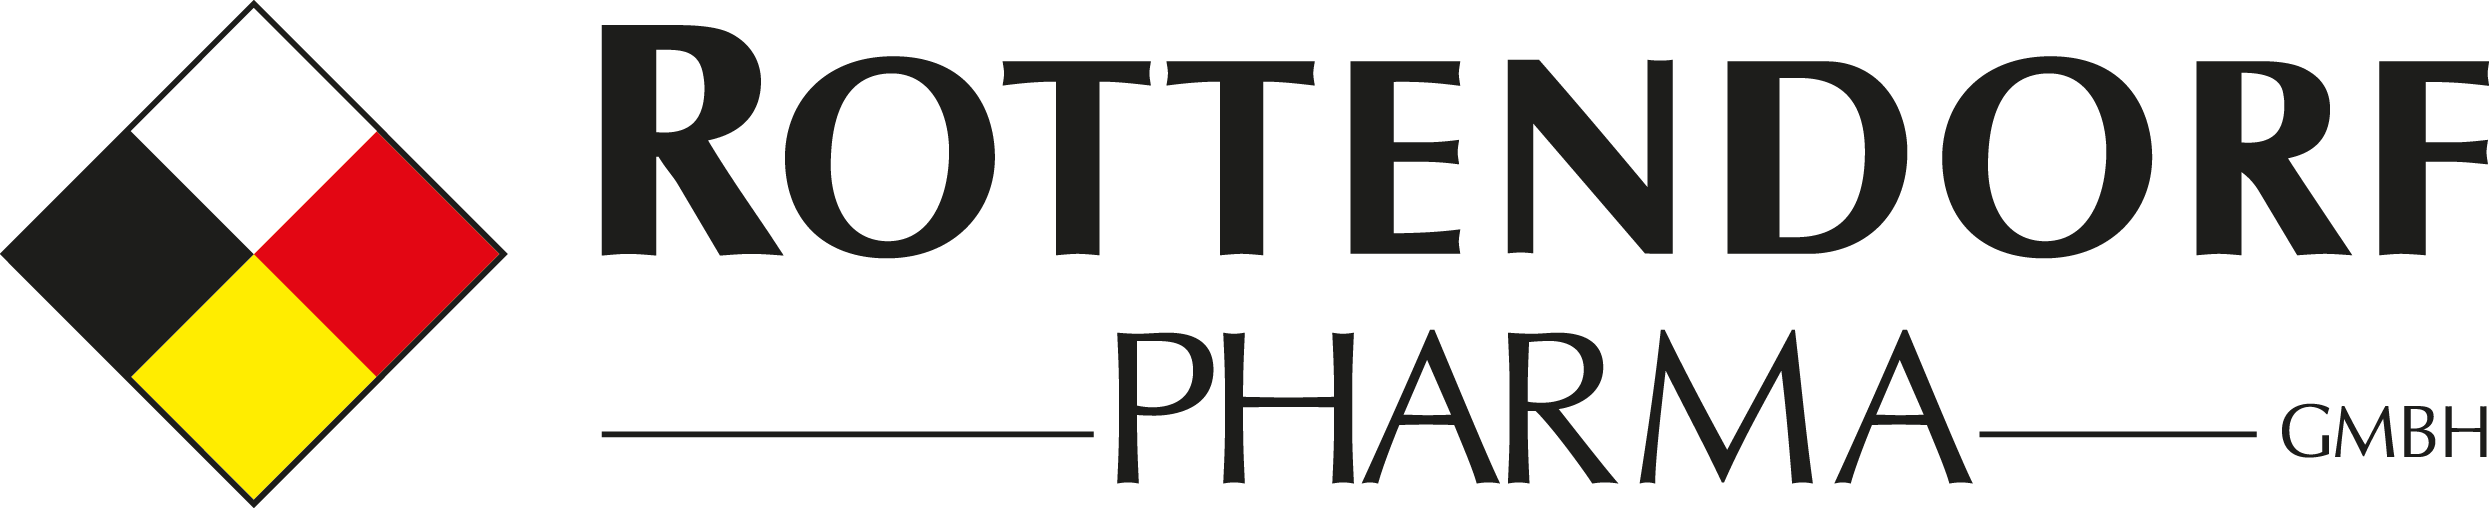 Illustration of the Rottendorf Pharma logo